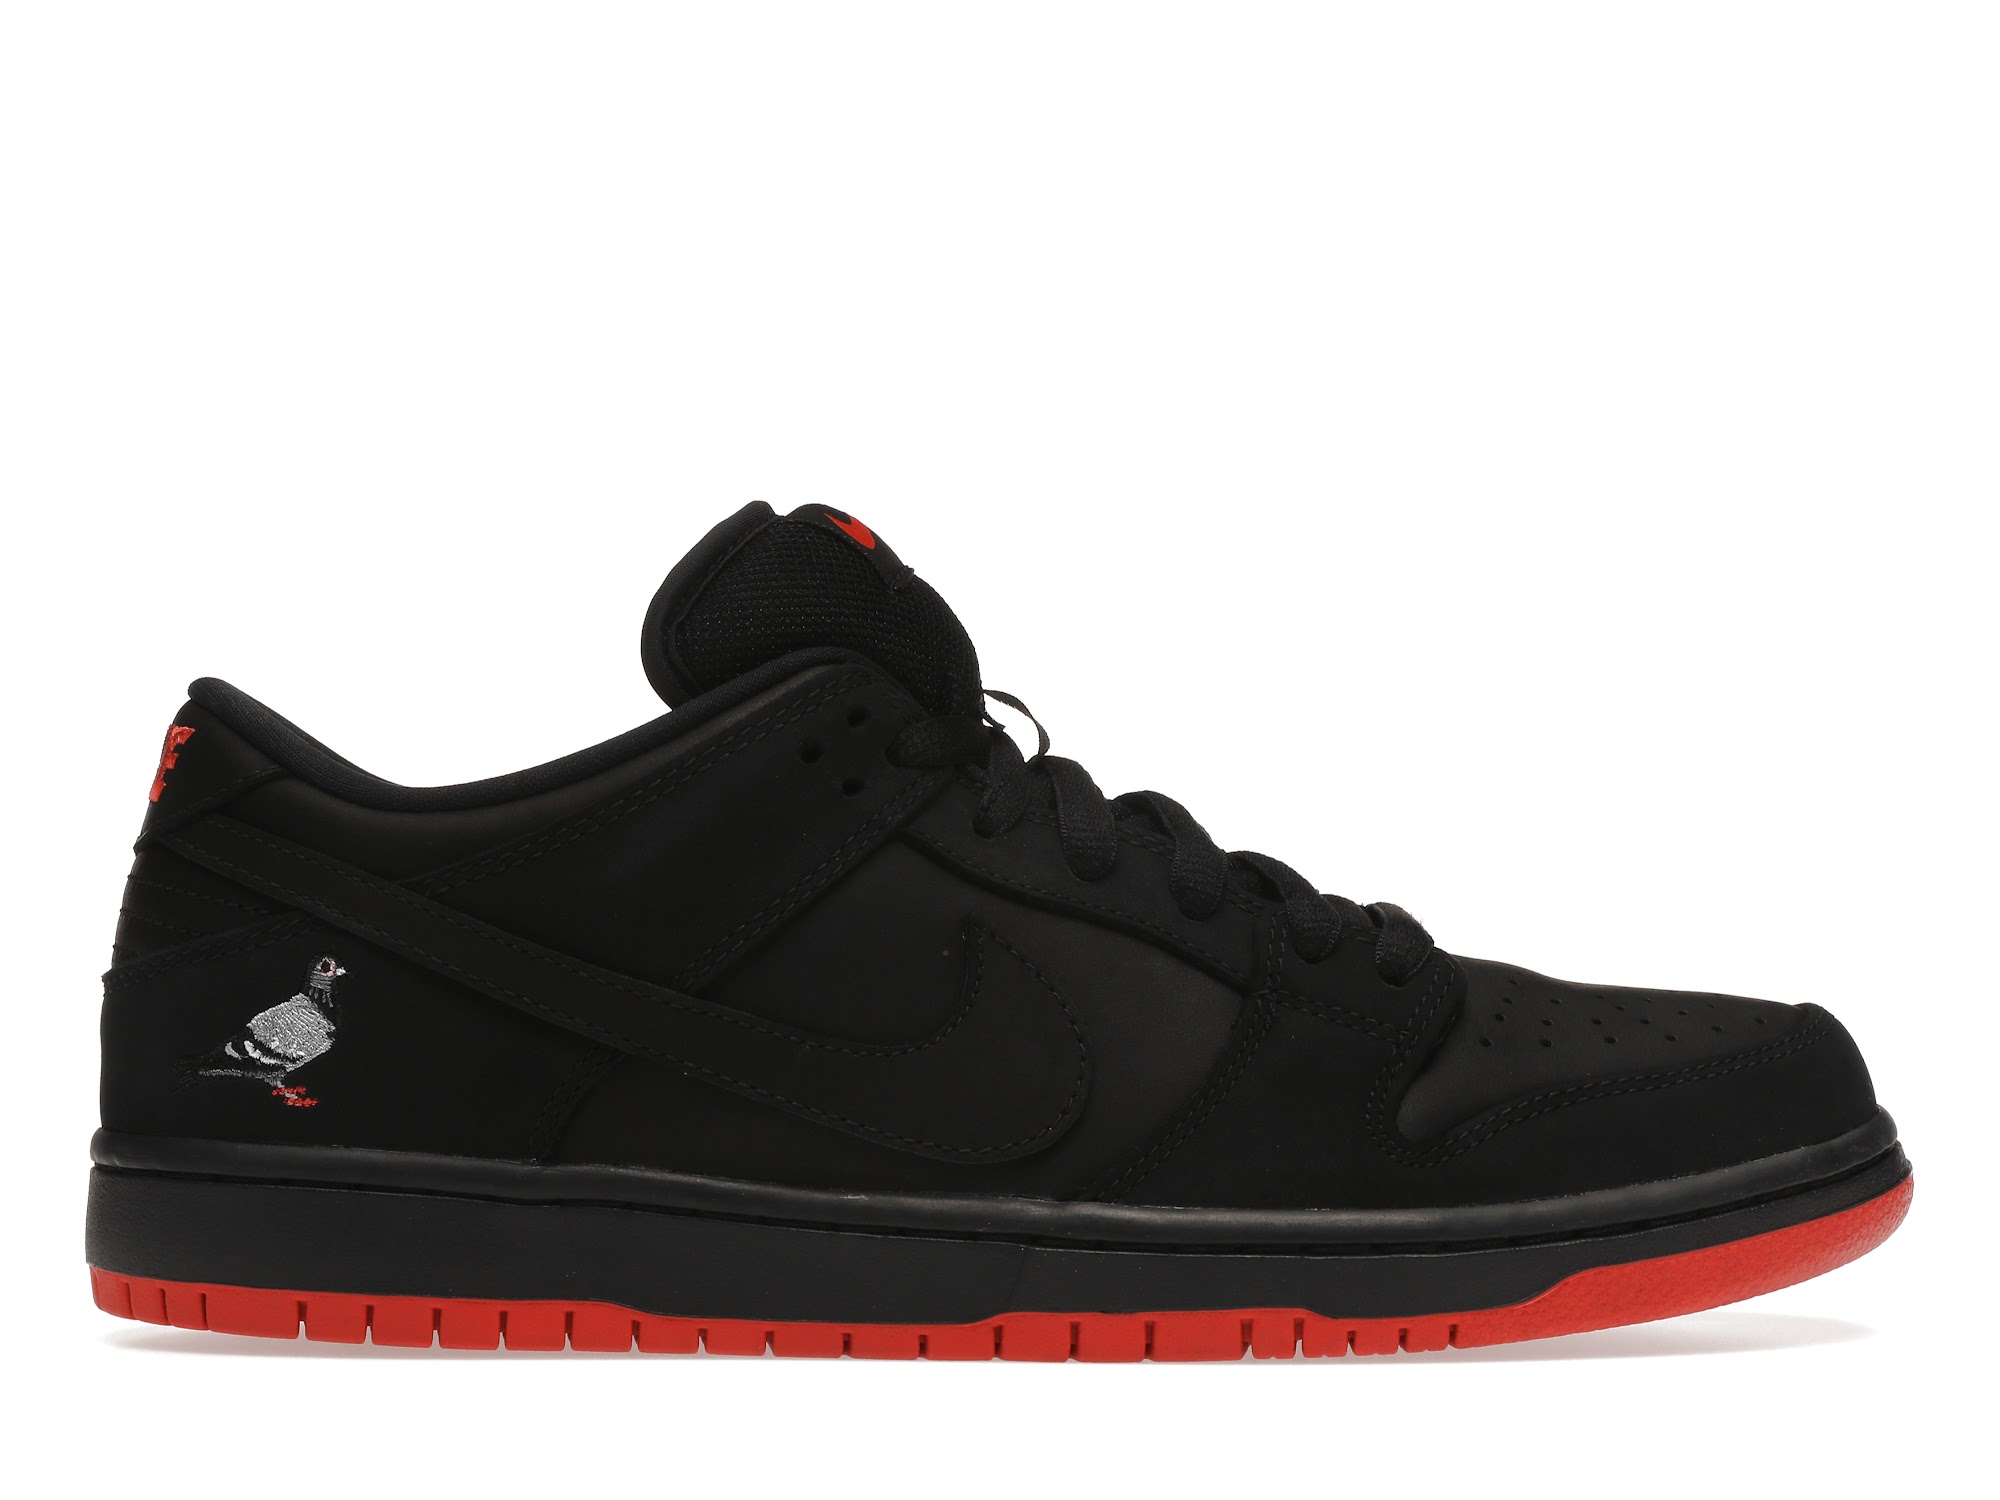 Nike SB Dunk Low Black Pigeon メンズ - 883232-008 - JP